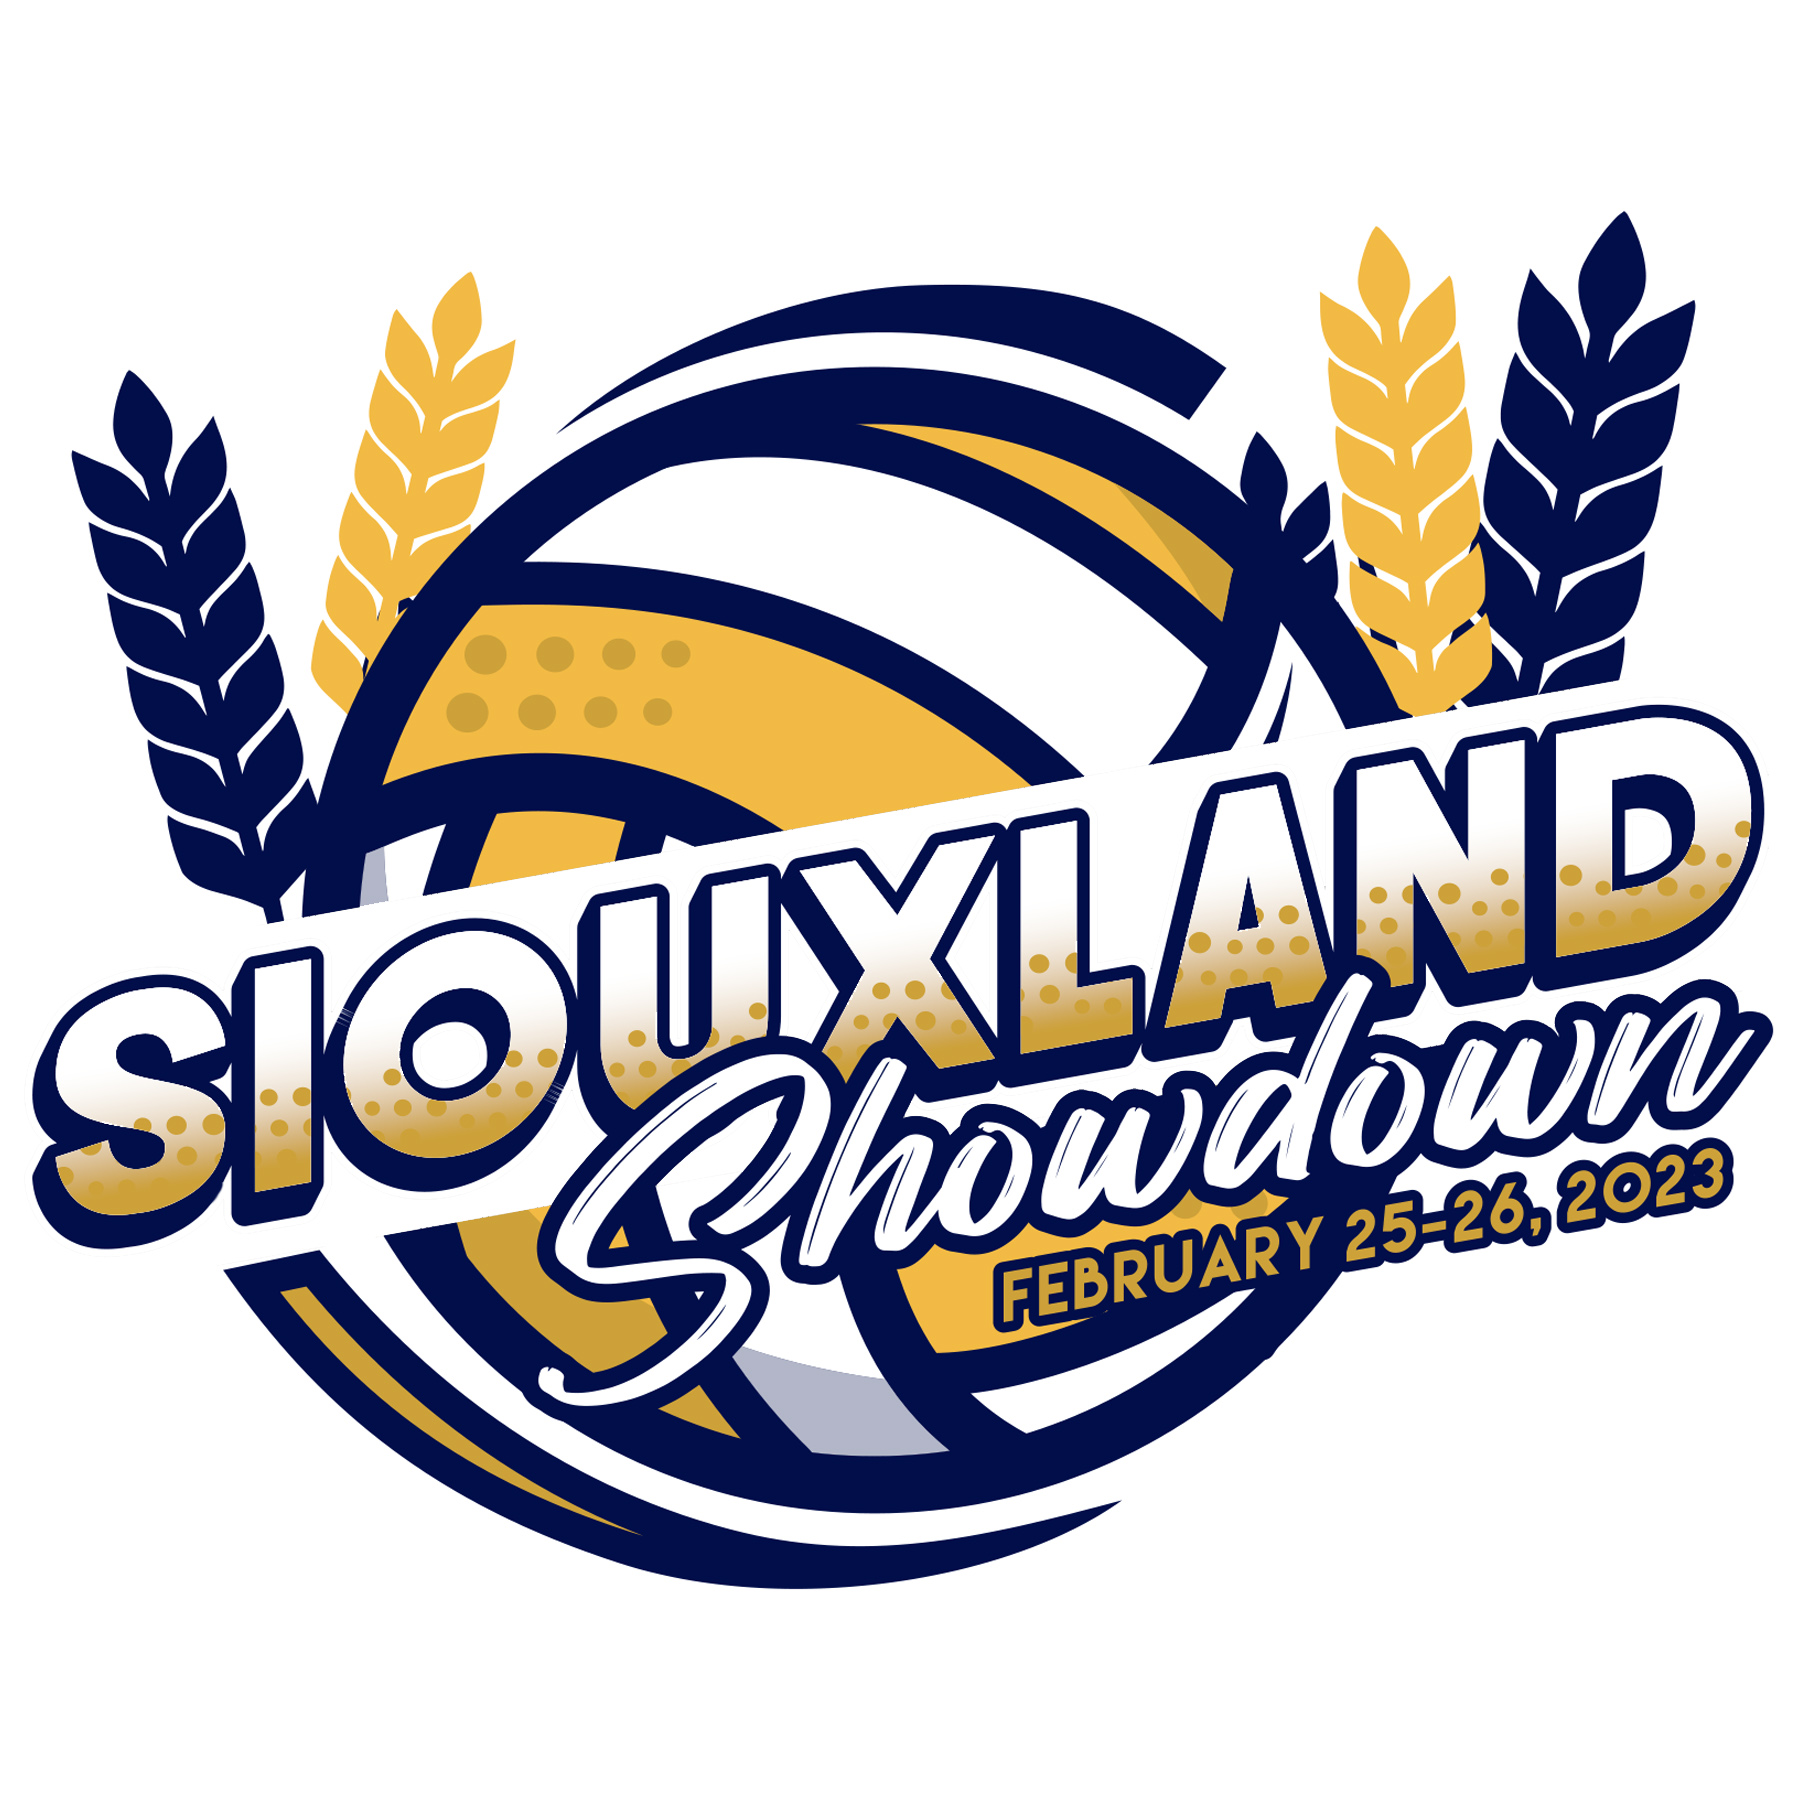 Siouxland Showdown